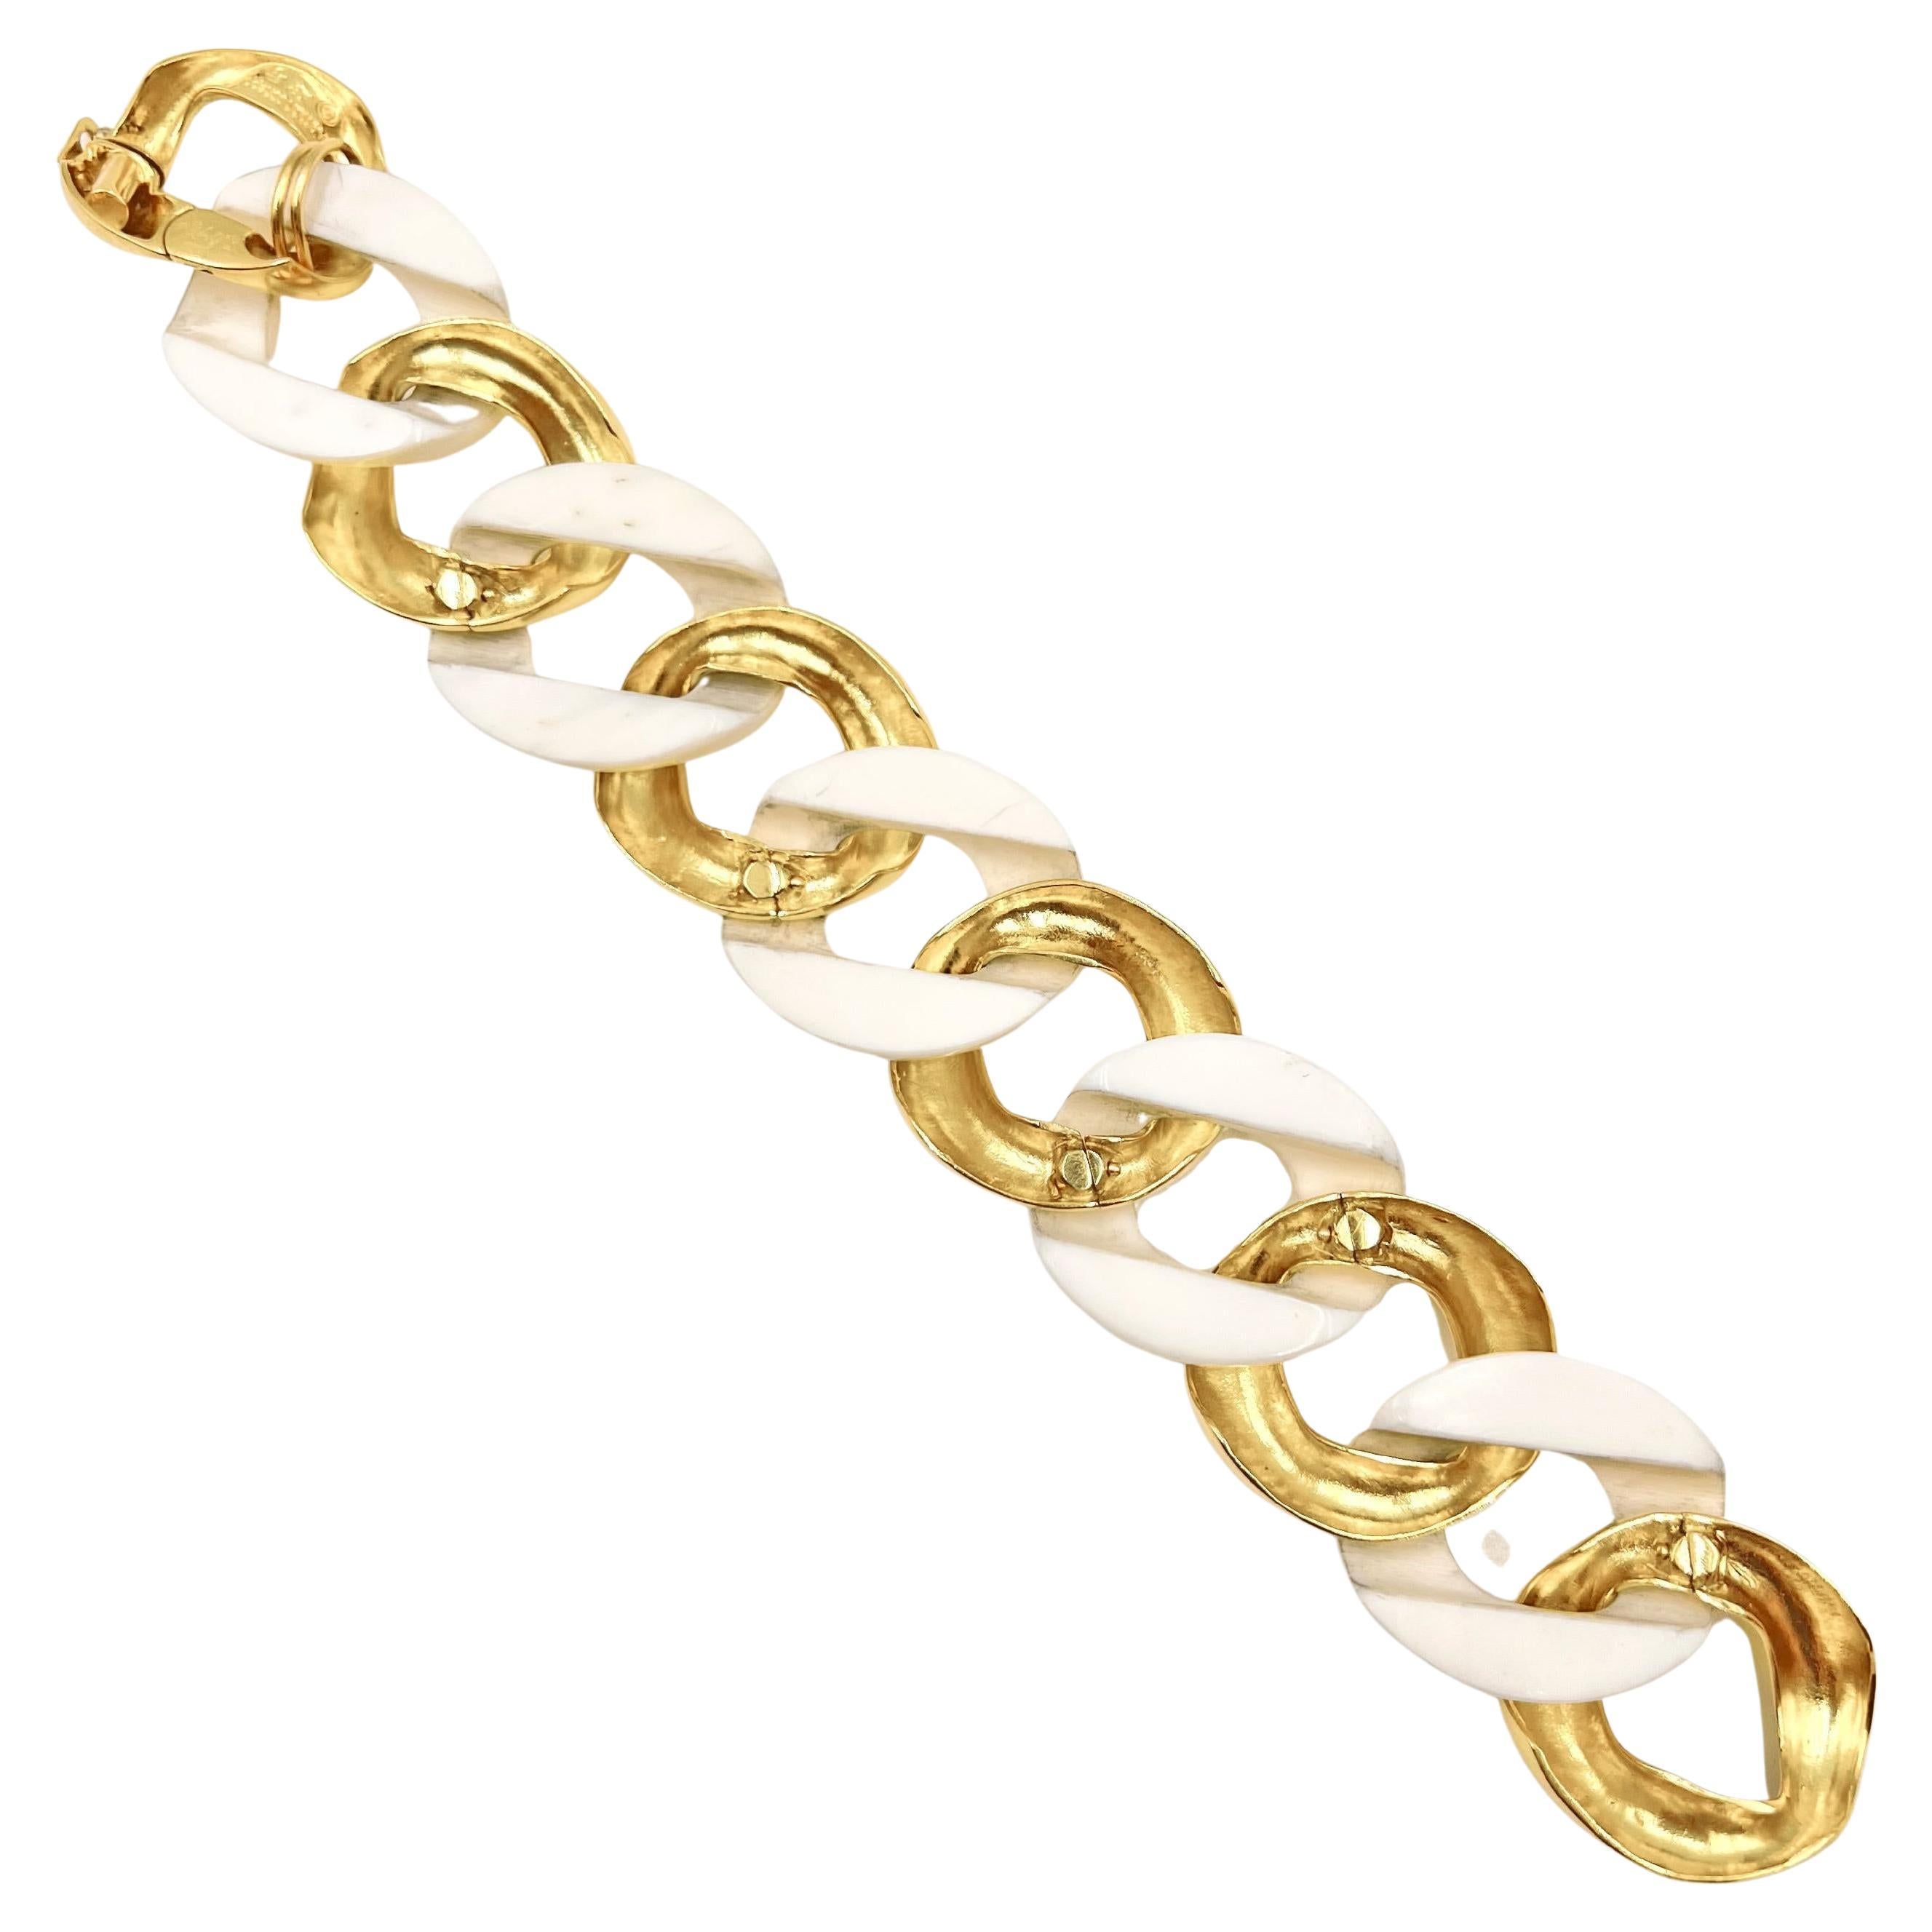 Seaman Schepps classic bracelet in alternating white ceramic and 18k yellow gold links. Measuring 7